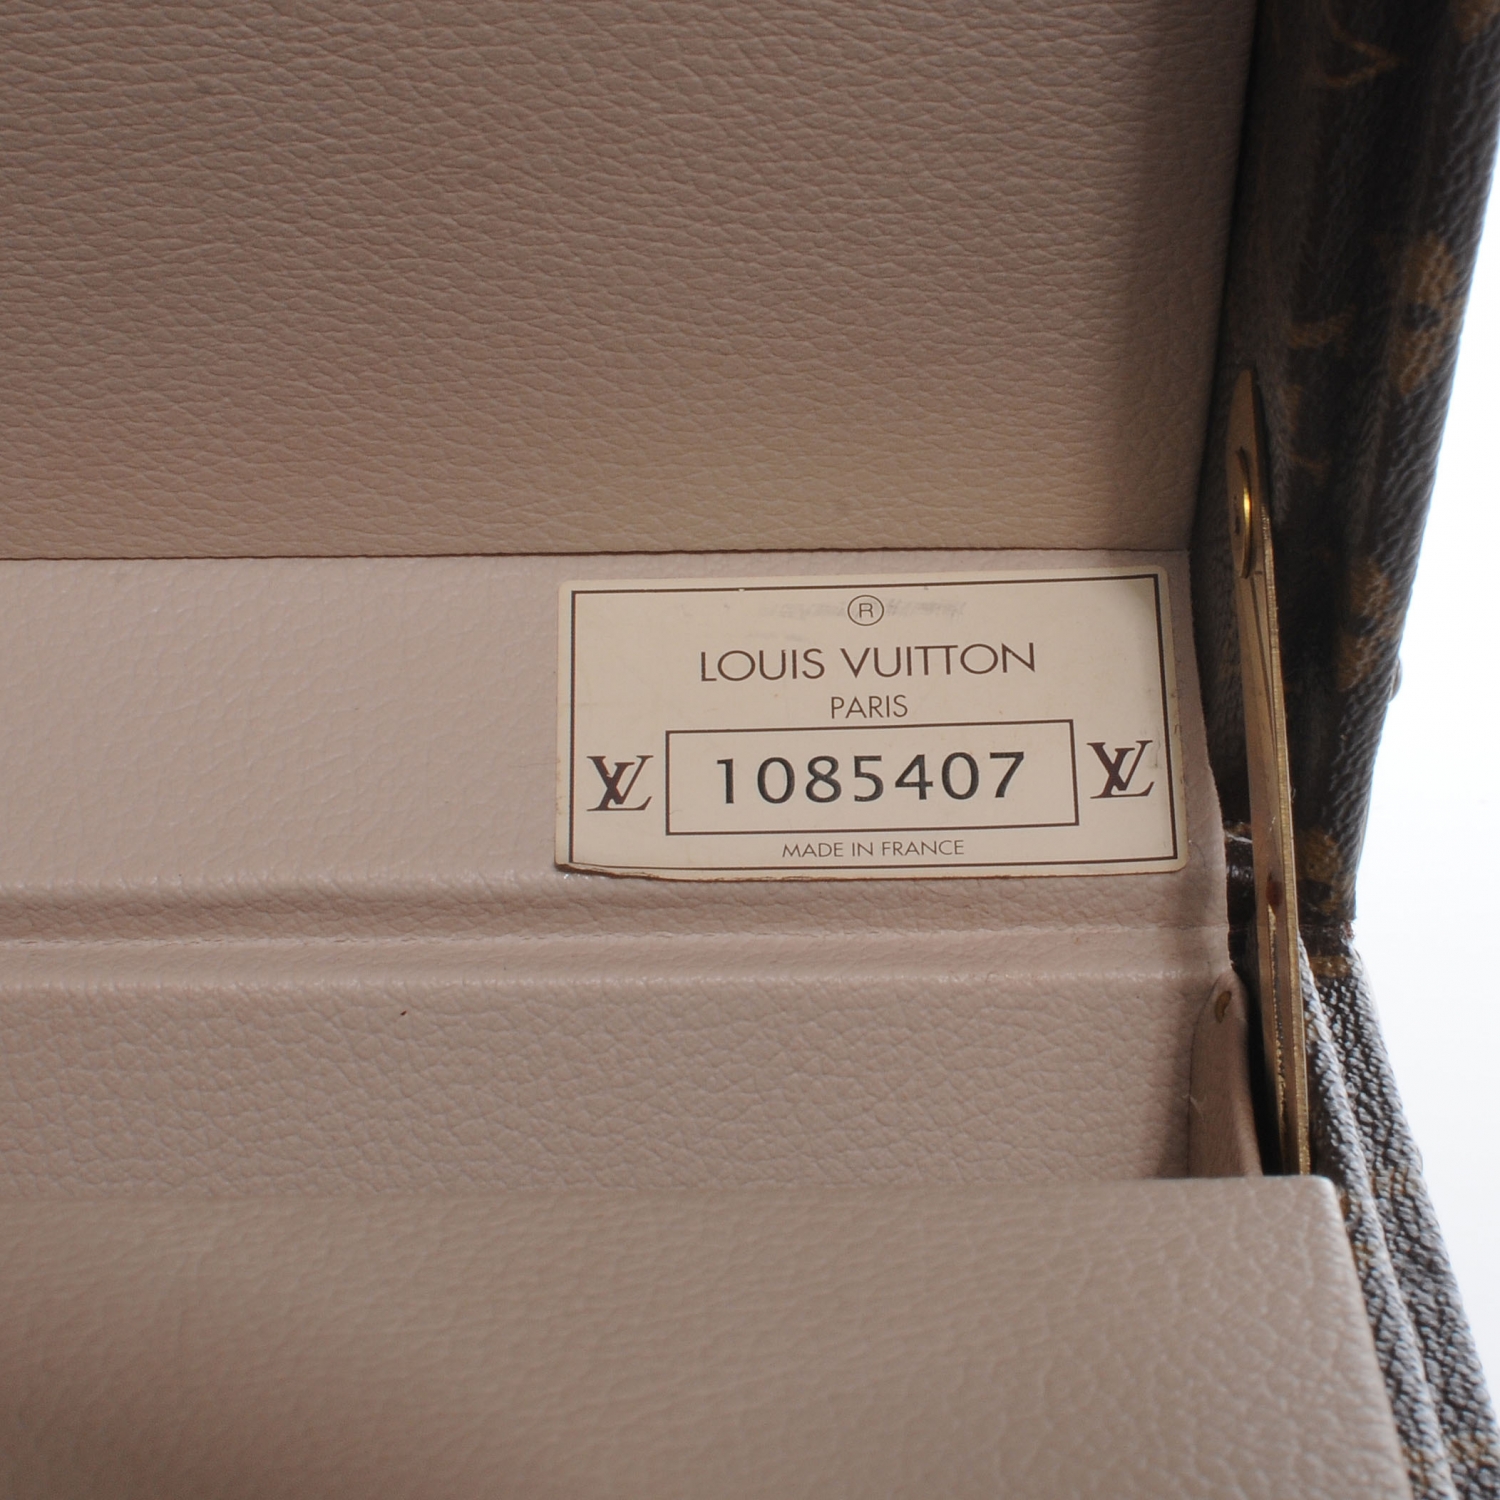 LOUIS VUITTON Boite Flacons Cosmetic Box Case Vanity Bag M21828